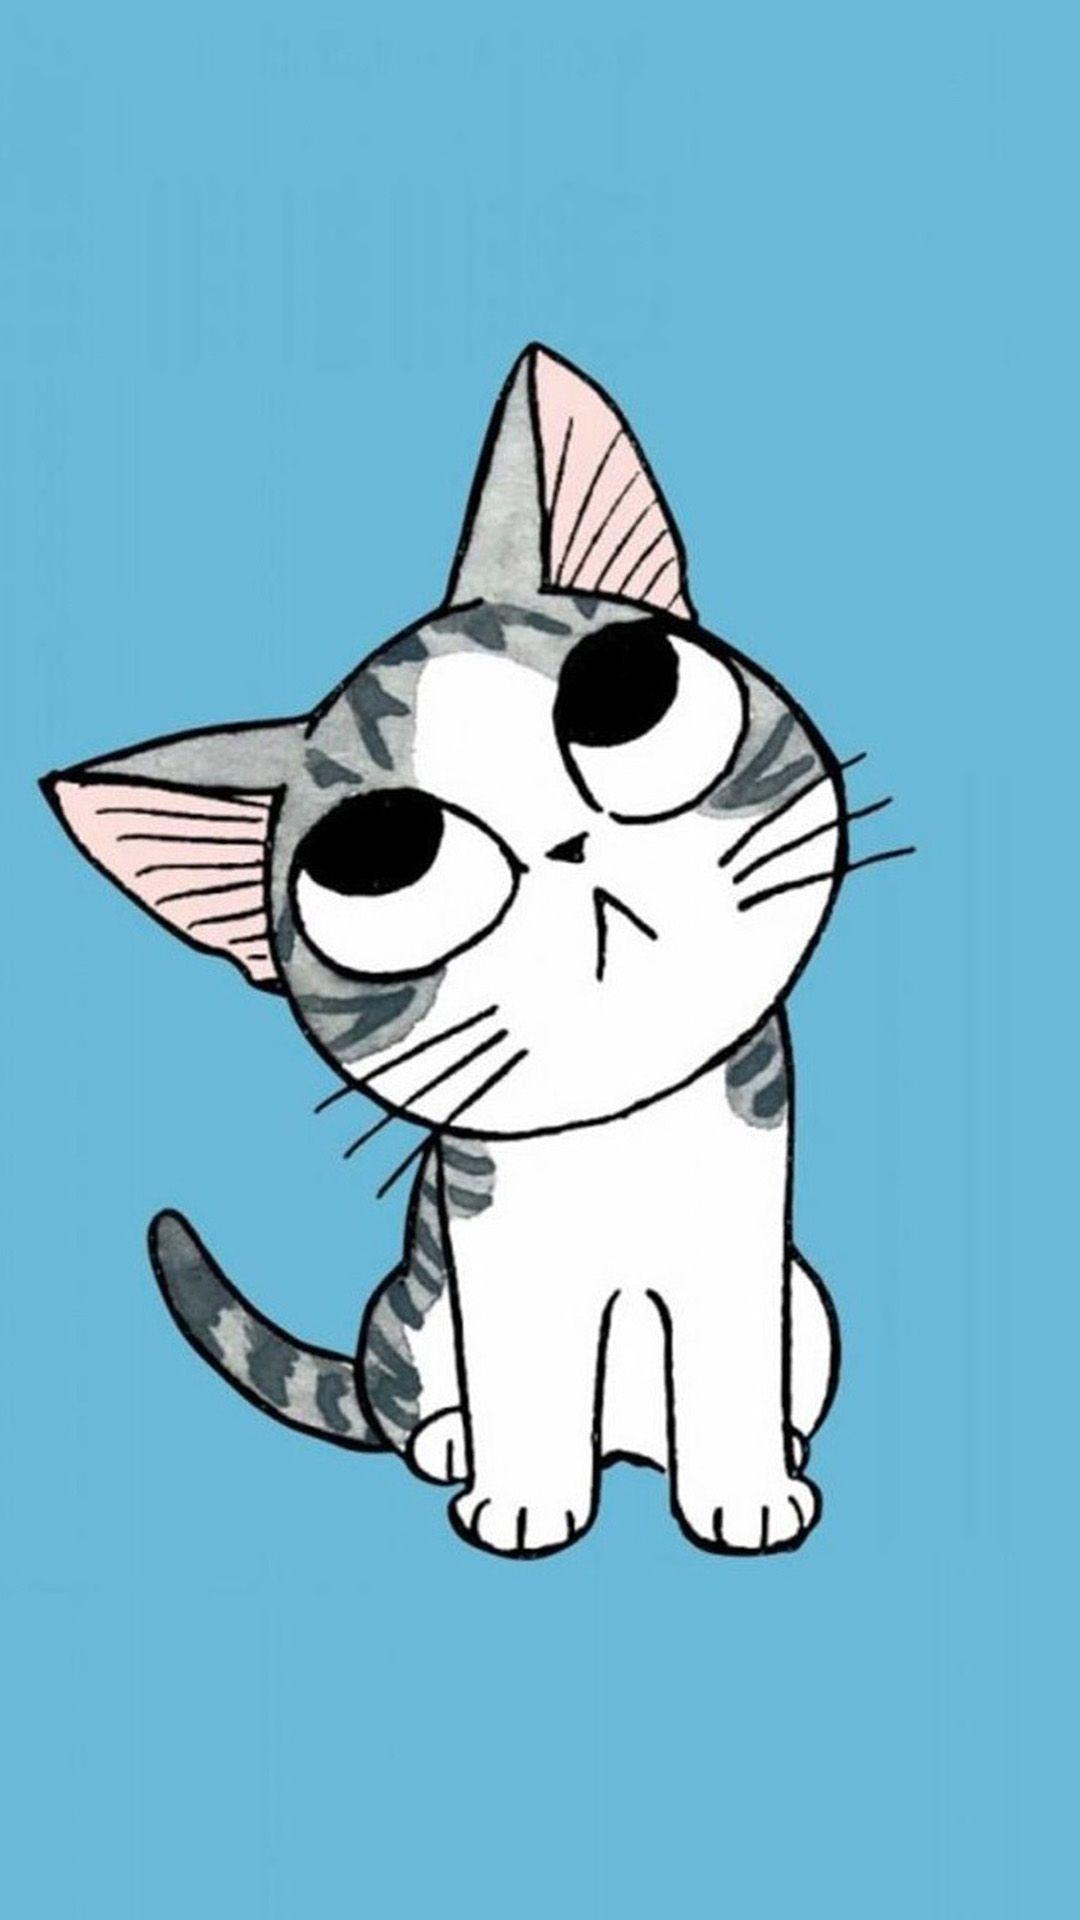 Cute cat cartoon 01 Galaxy S5 Wallpaper. Papel de parede gatos, Papel de parede de gato, Desenhos de gatos